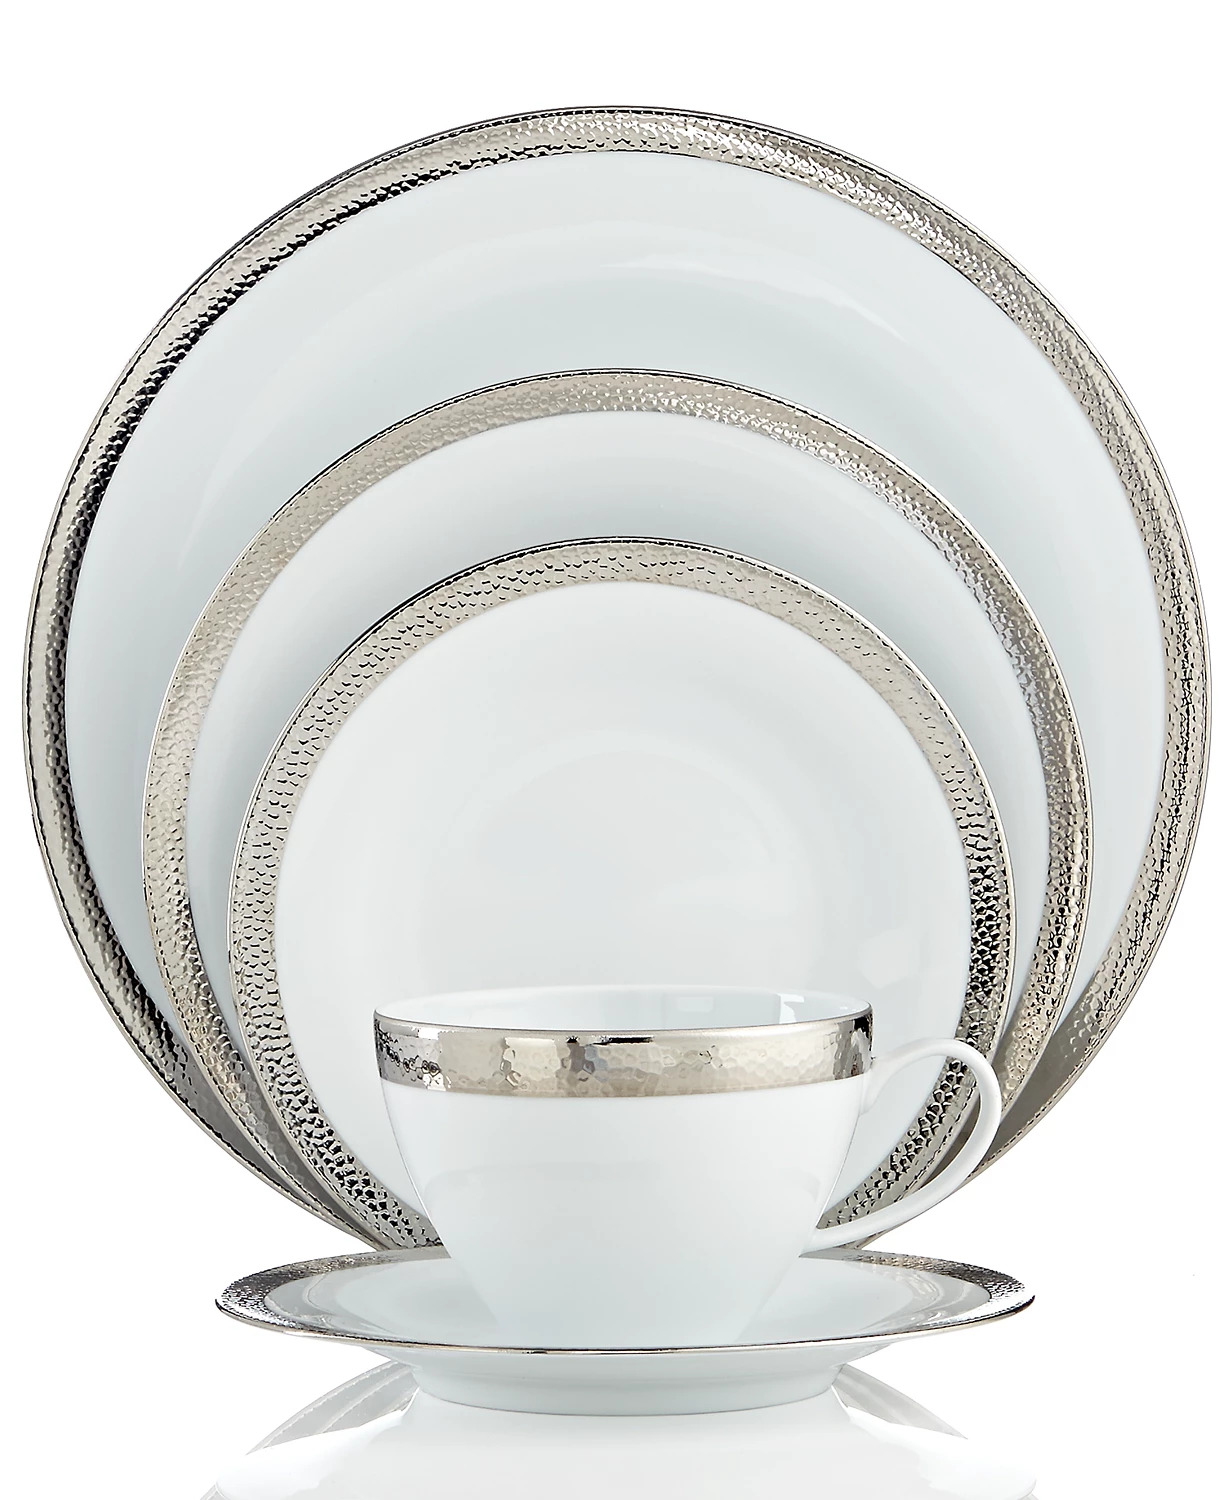 Michael Aram Silversmith 10-piece Porcelain & Platinum Place Setting Dinnerware